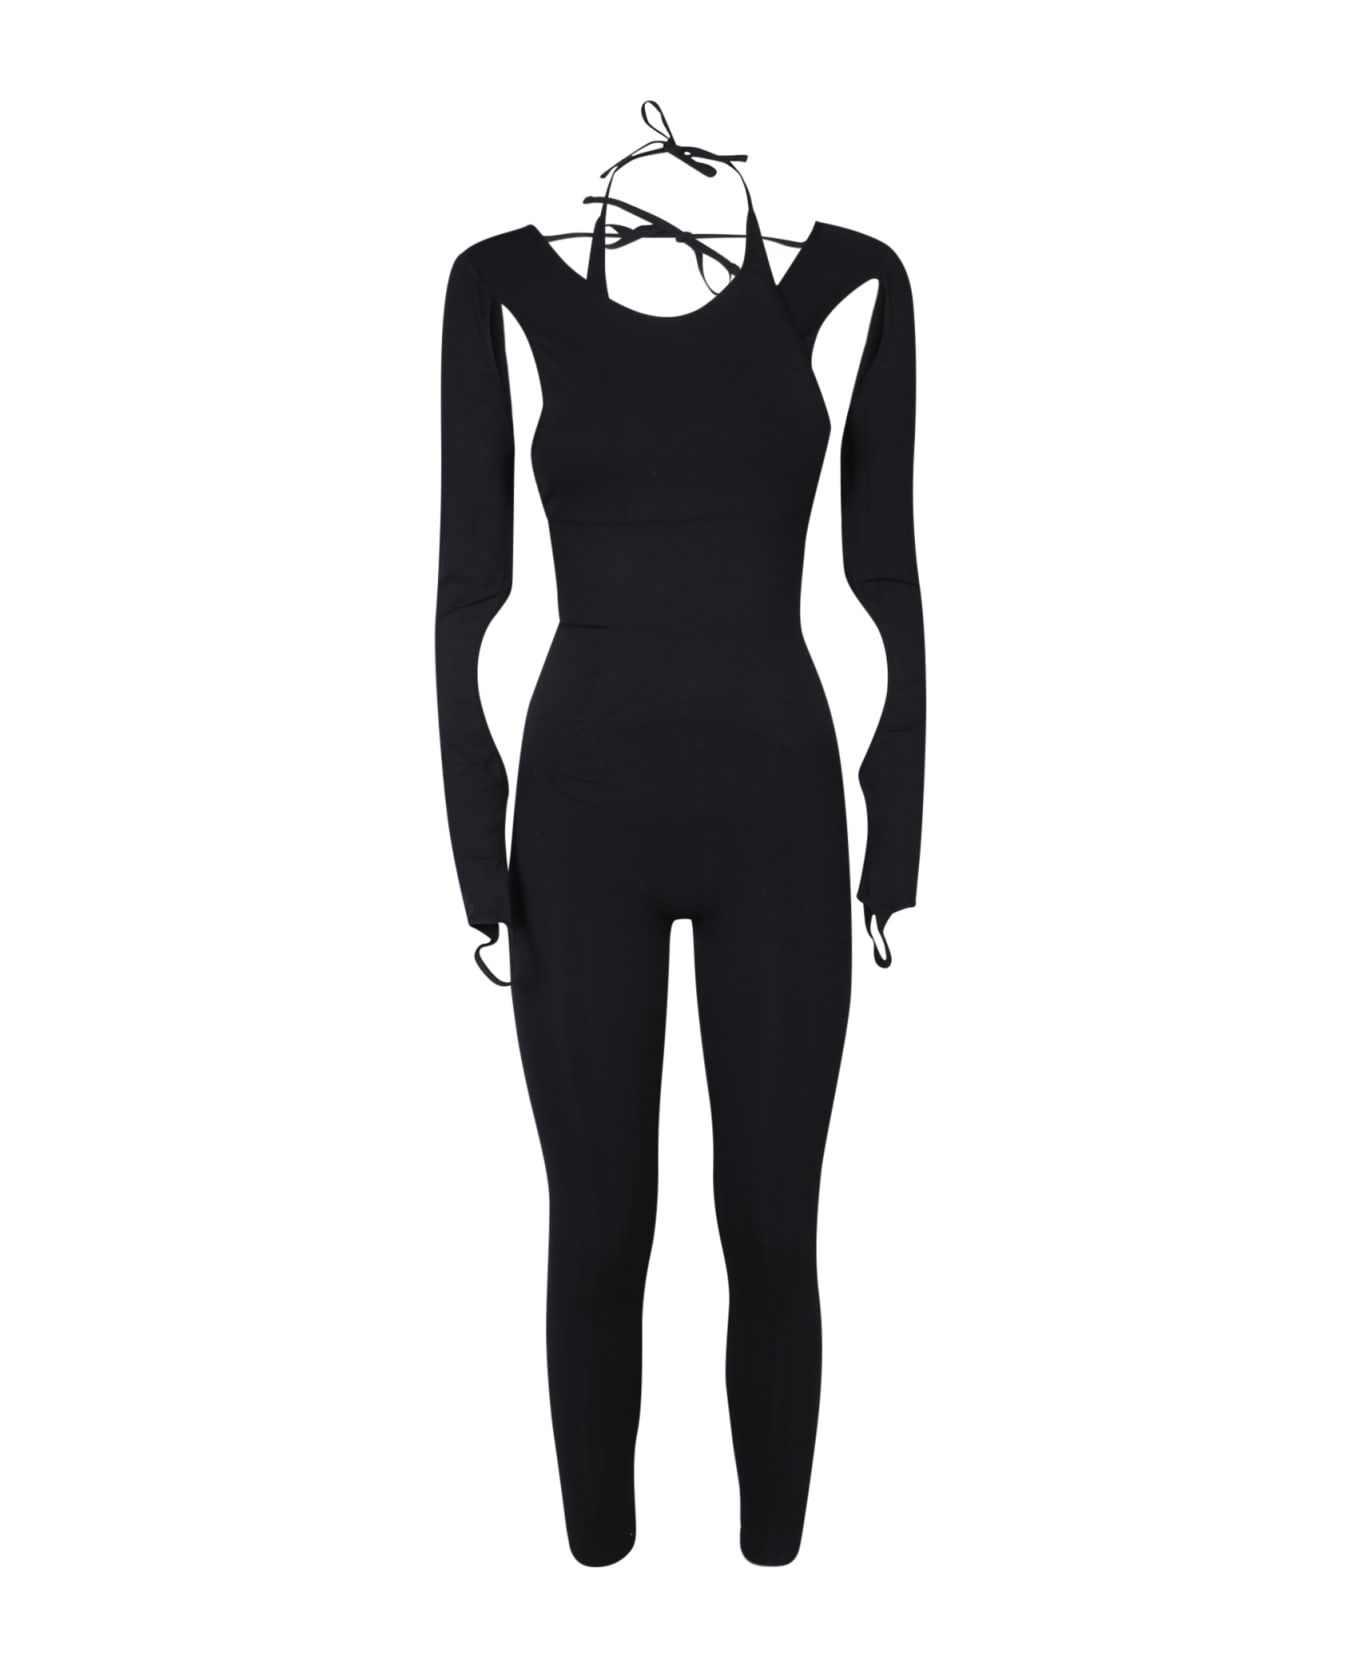 ANDREĀDAMO Sculpting Black Jumpsuit - Black ジャンプスーツ